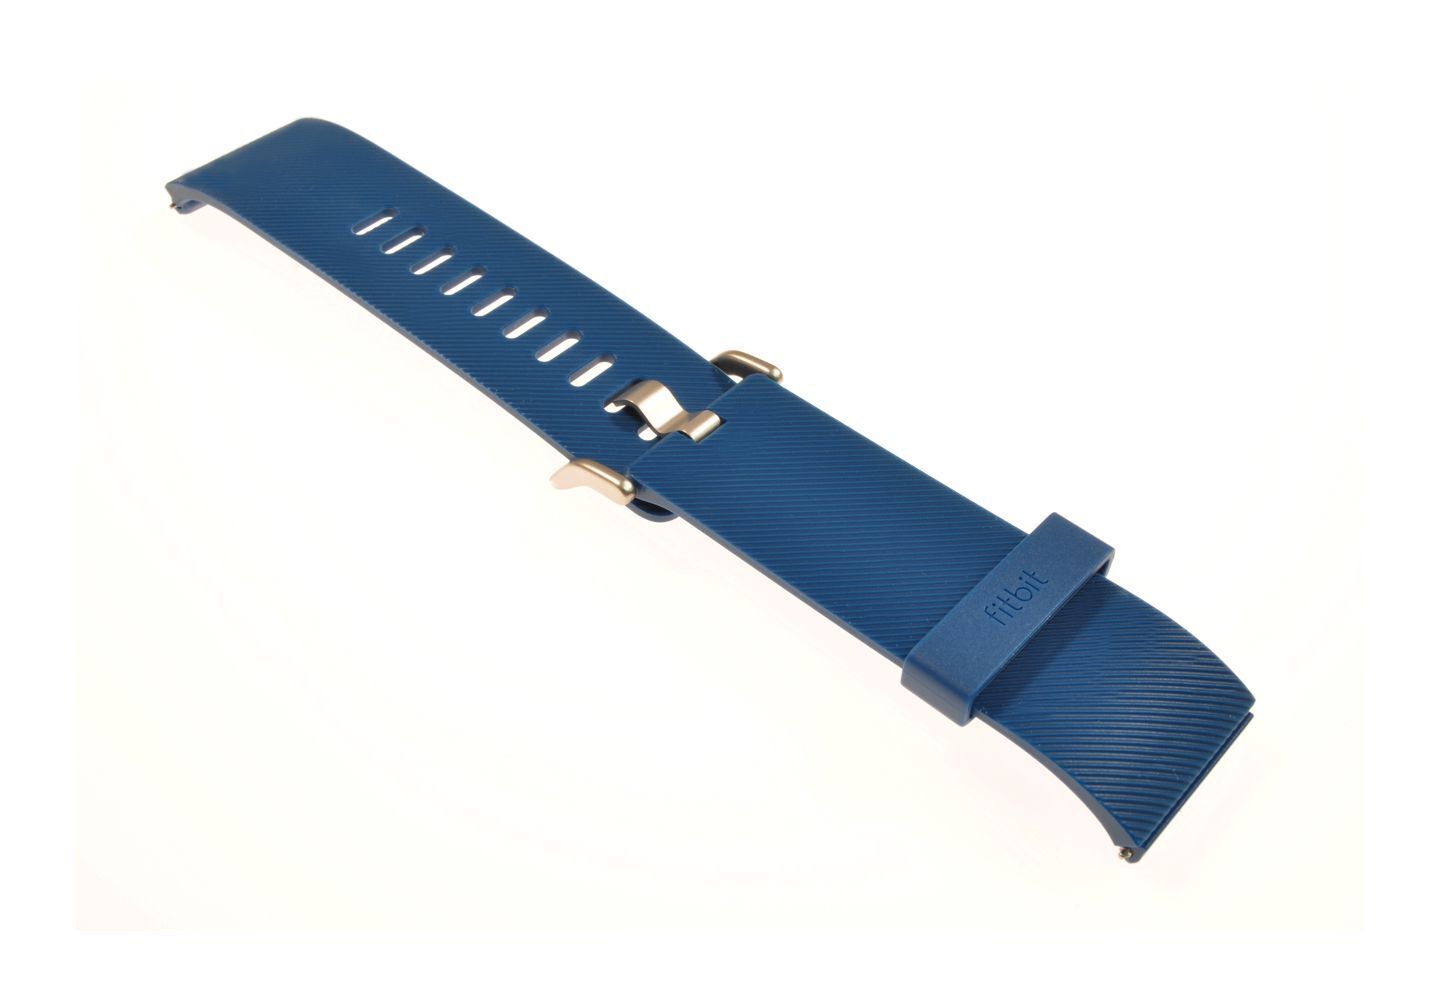 FB159ABBUS - Blue Wristband Small For Fitbit Blaze Smartwatch (FB502)